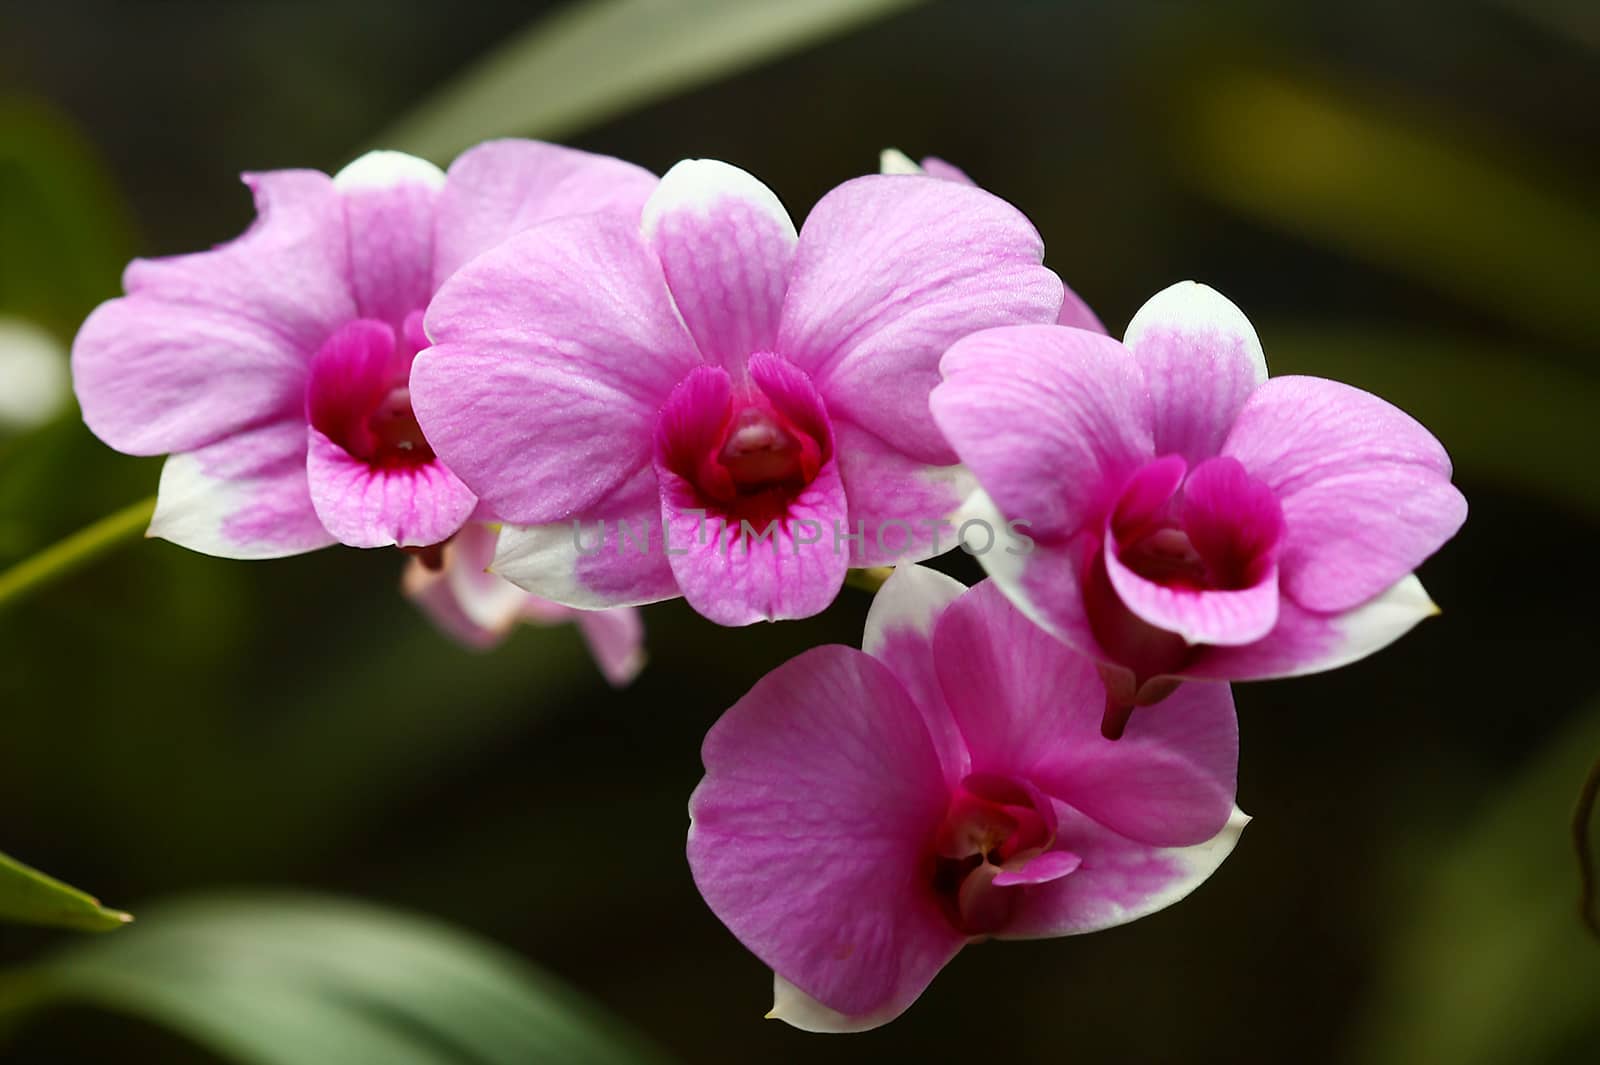 Orchid by wyoosumran